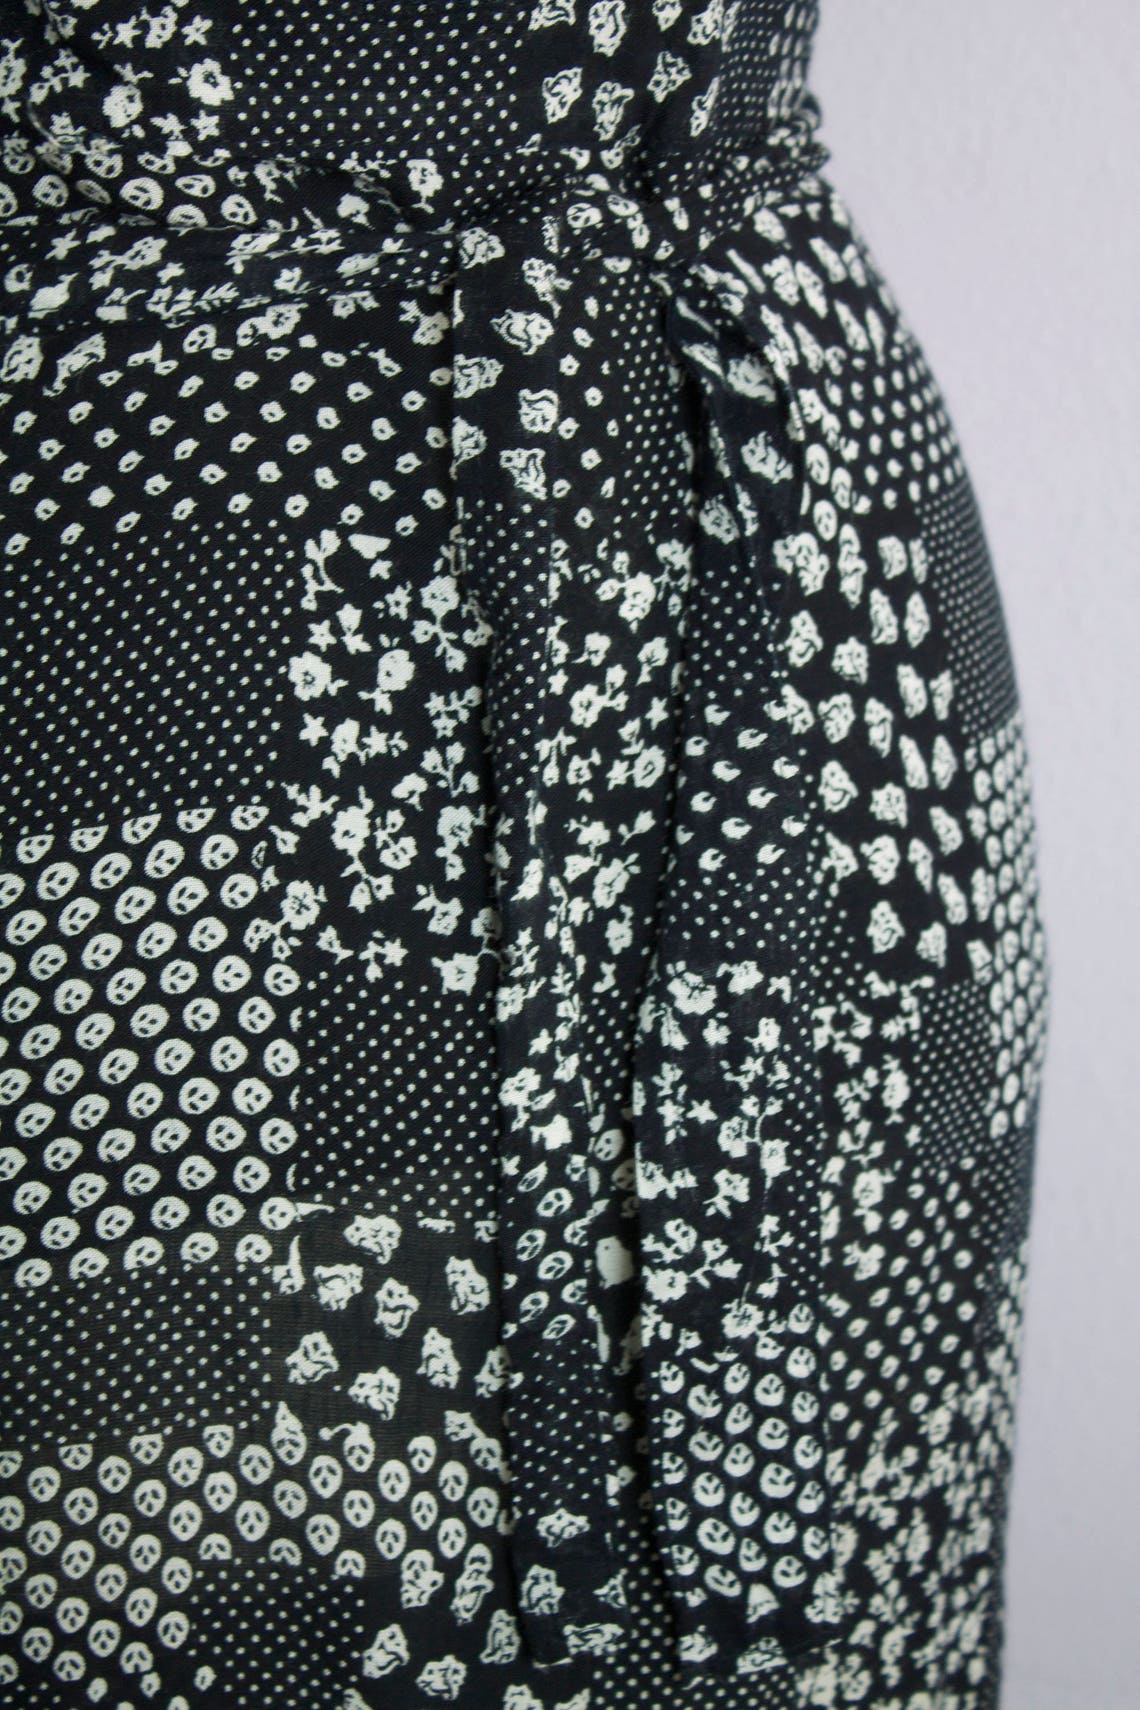 Vintage Patchwork Print Black White Maxi Wrap Skirt M/L - Etsy